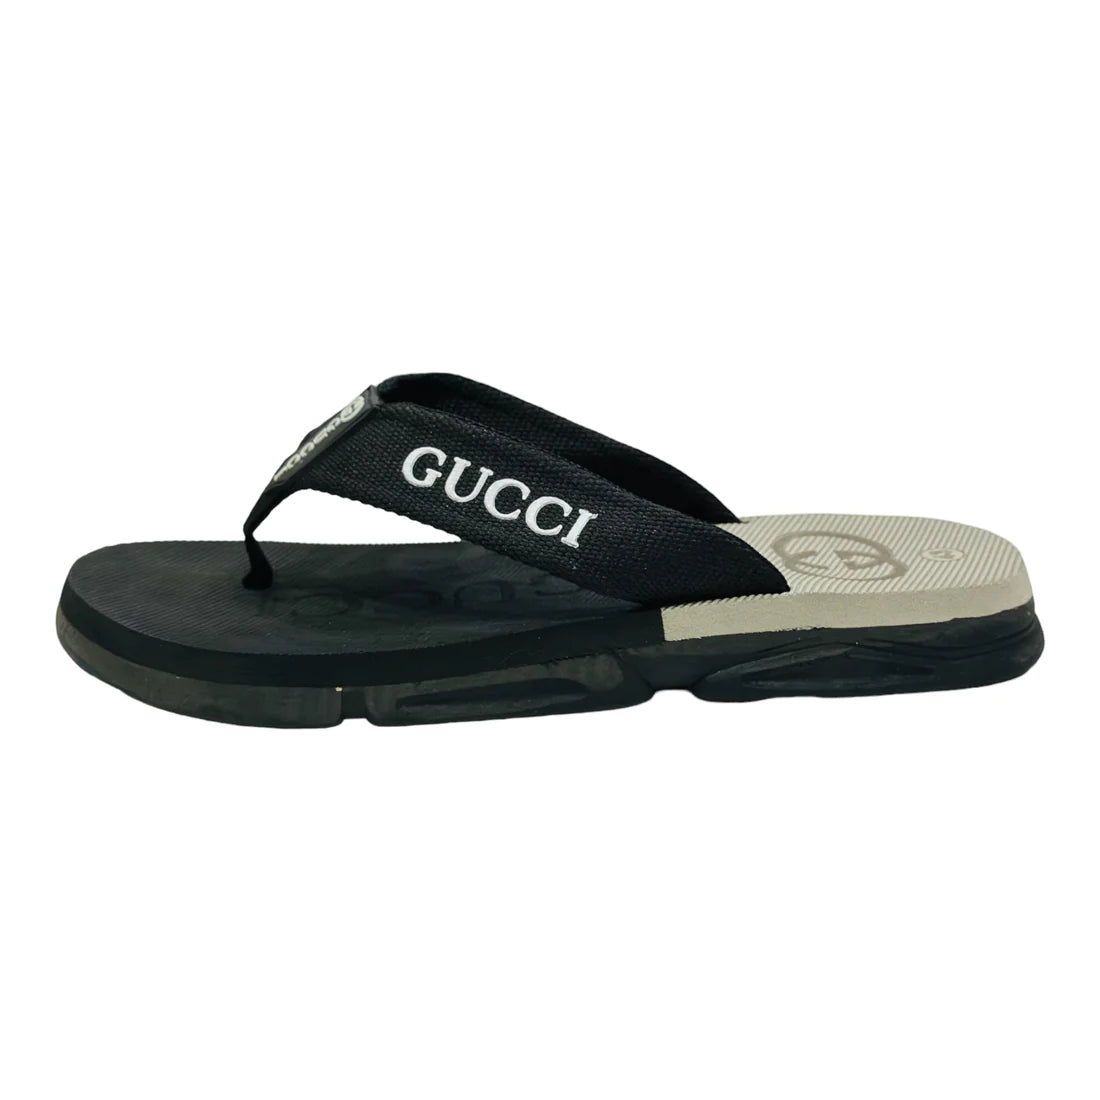 Premium Extra Soft Black G-U-C-C-I Cross Slipper